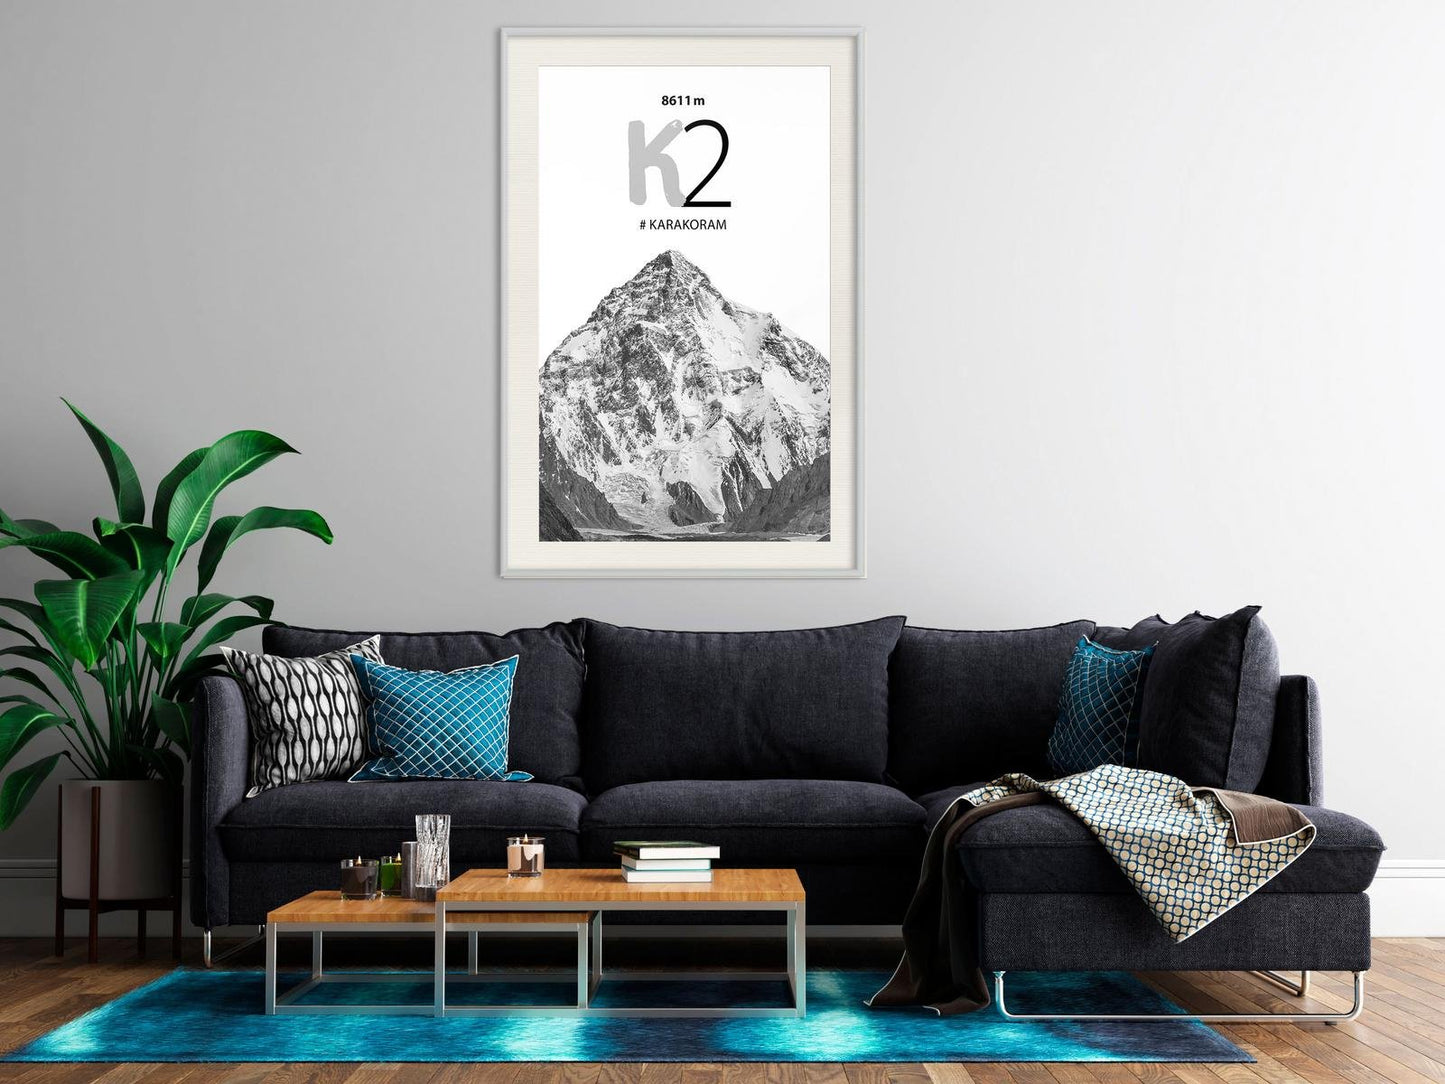 Gipfel der Welt: K2